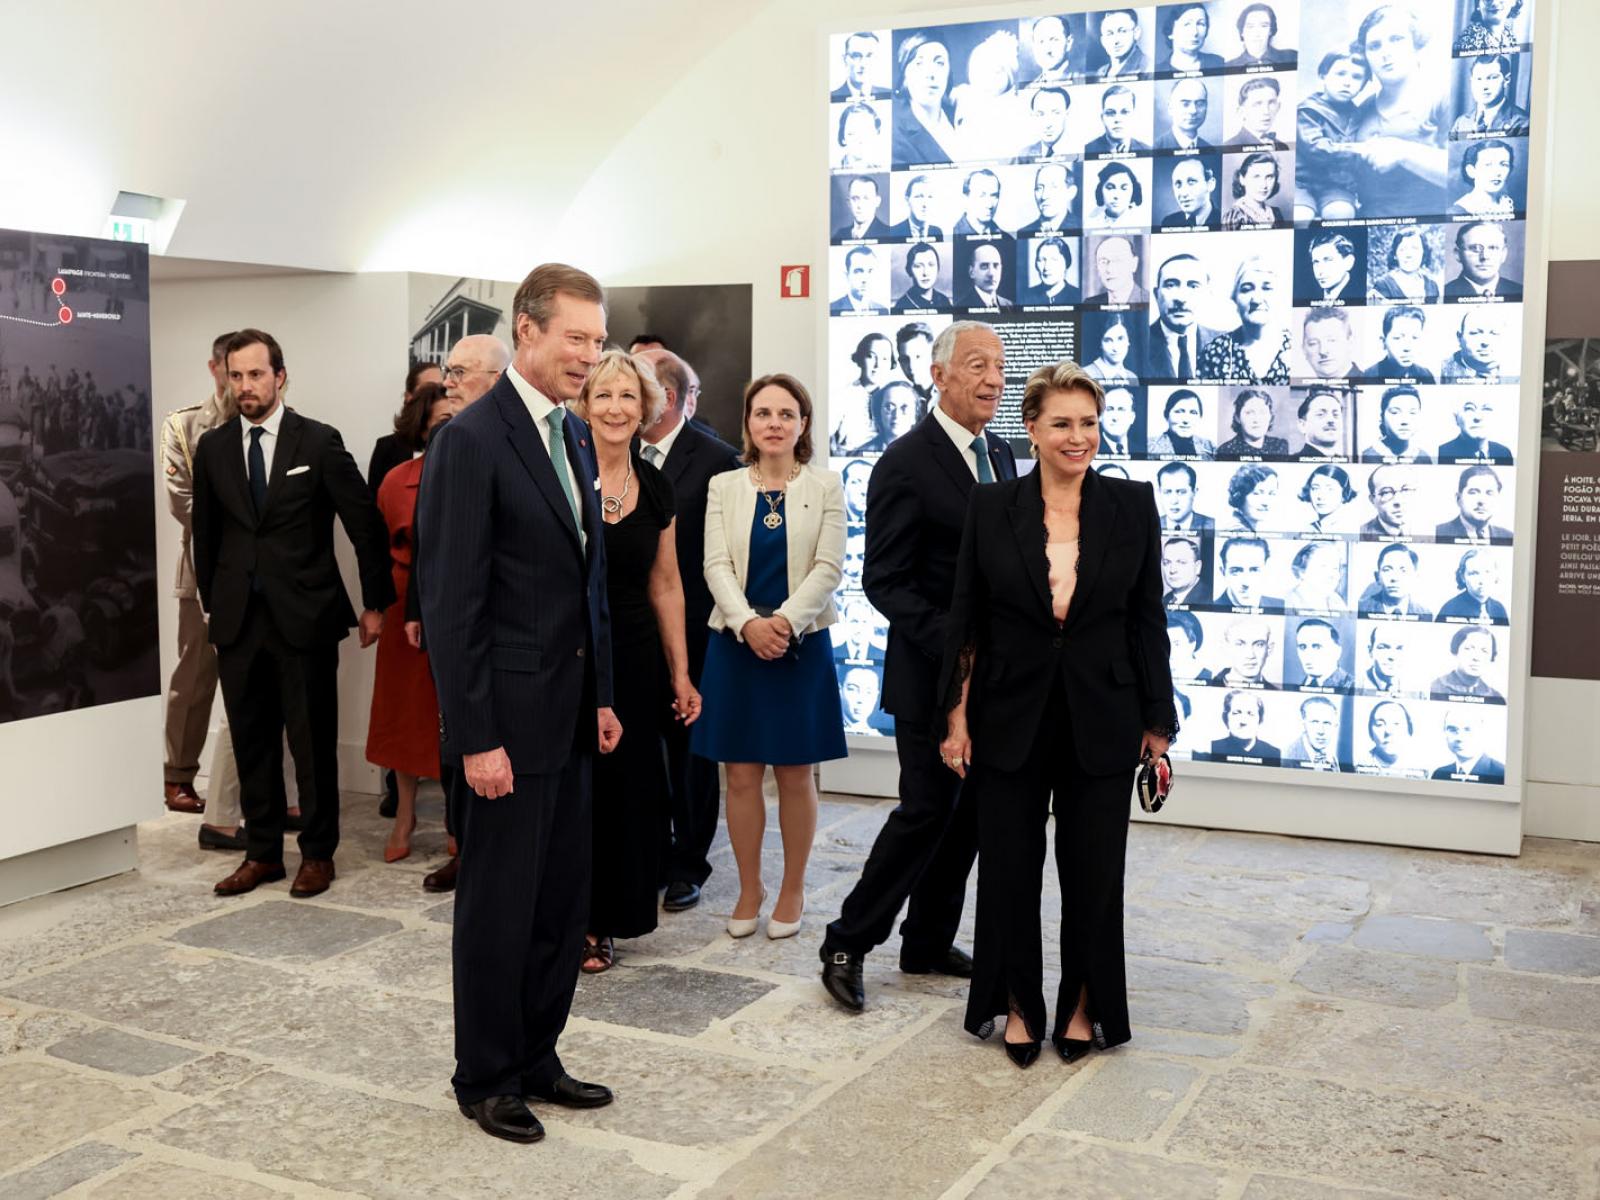 Le Couple grand-ducal visite l'exposition "Portugal et Luxembourg"